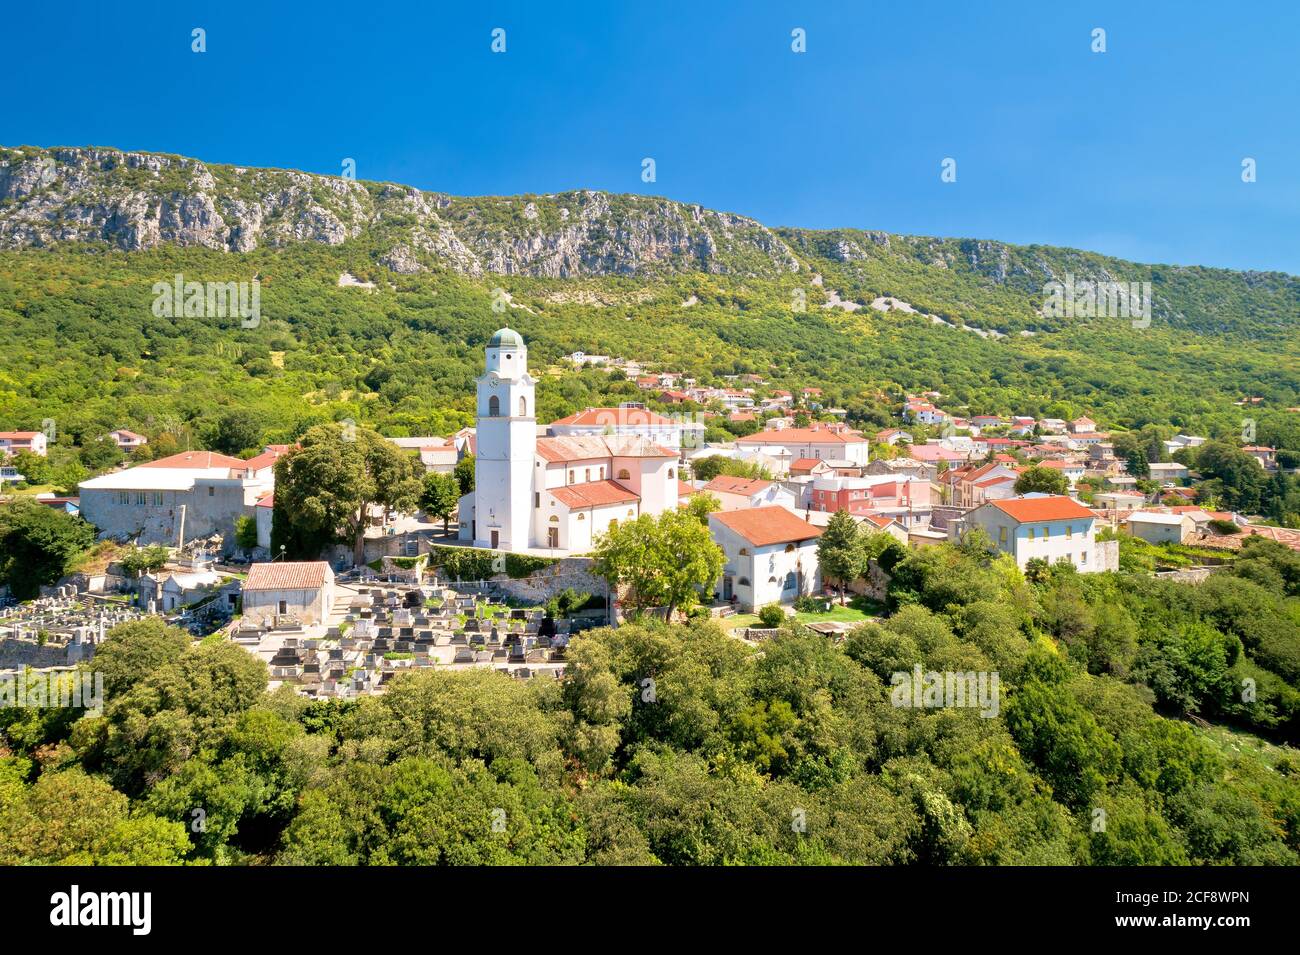 Historic town of Bribir and Vinodol valley cliffs aerial view, Kvarner region of Croatia Stock Photo